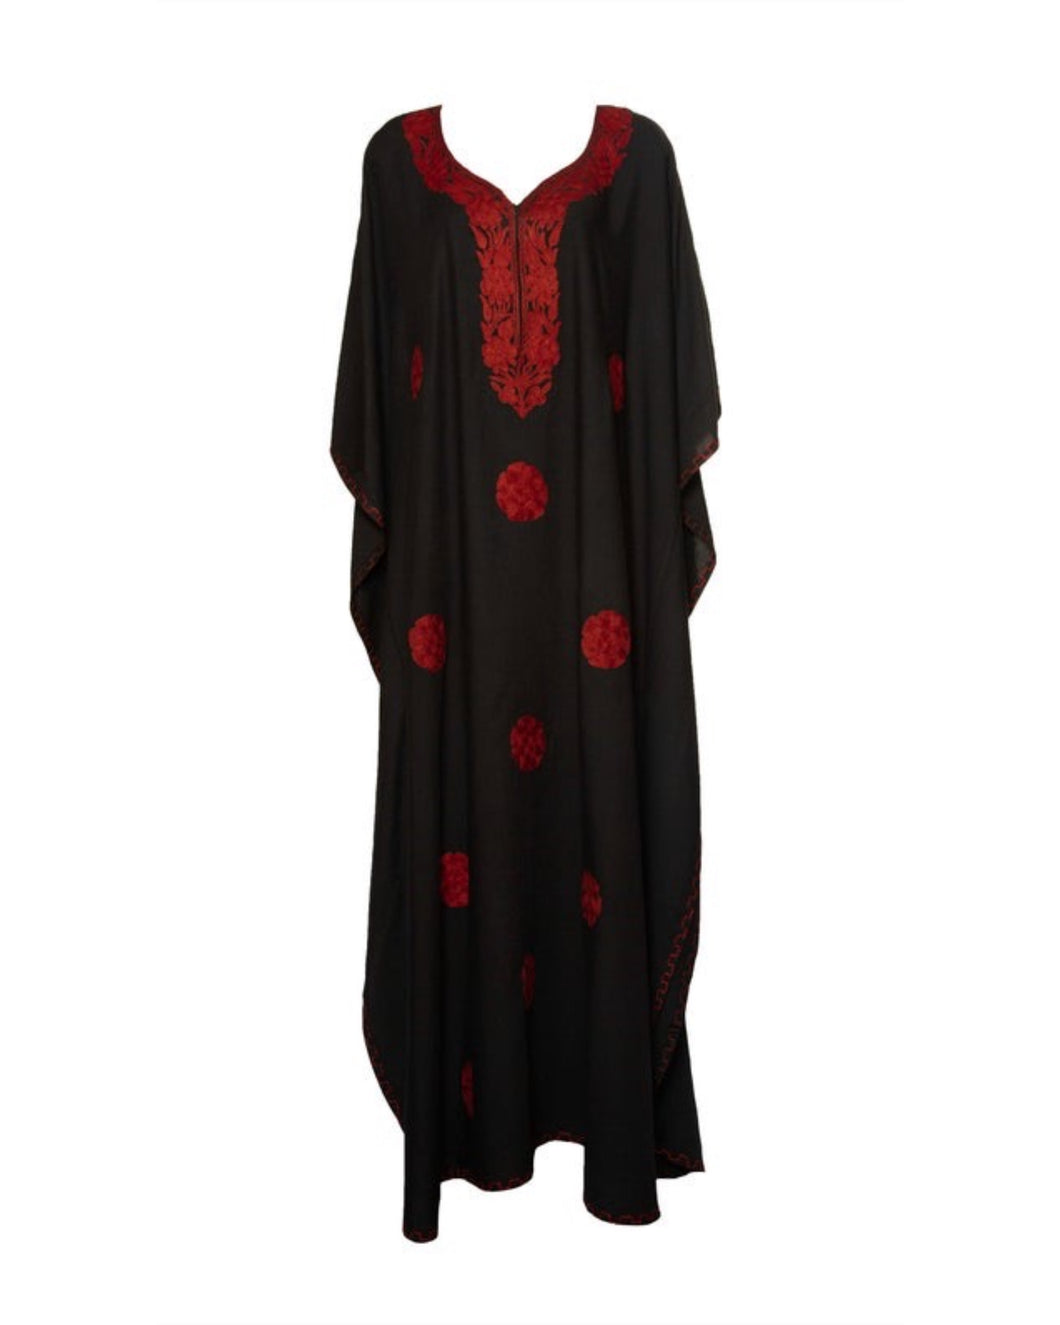 Kaftan Dress (Black with Red Flowers)